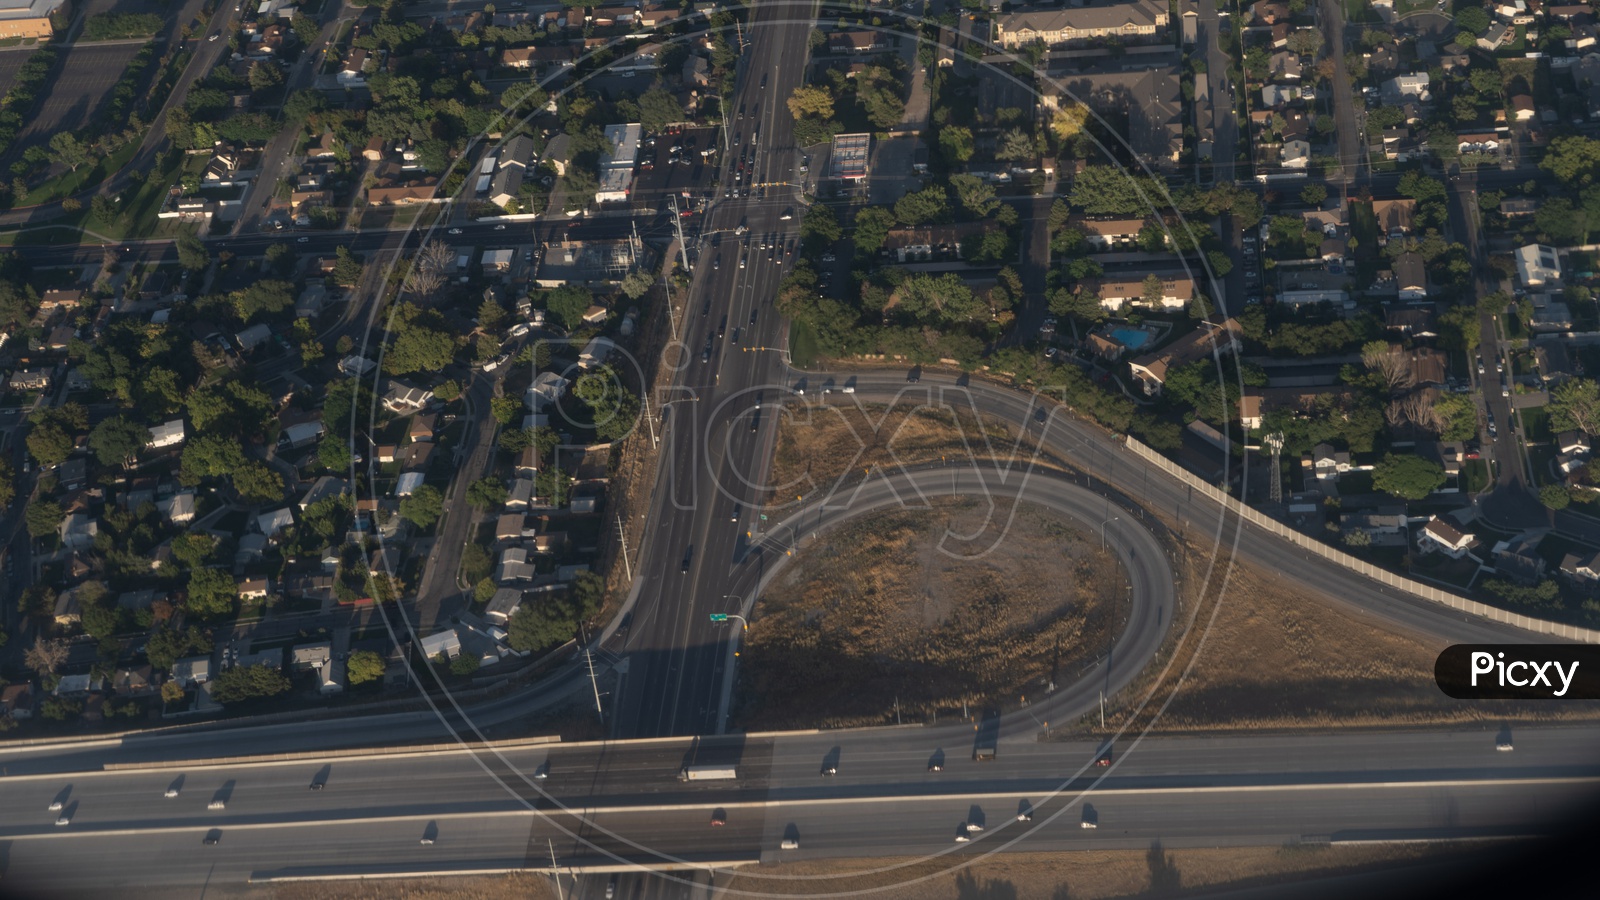 Birdseye view of the roadways in urban Salt Lake City